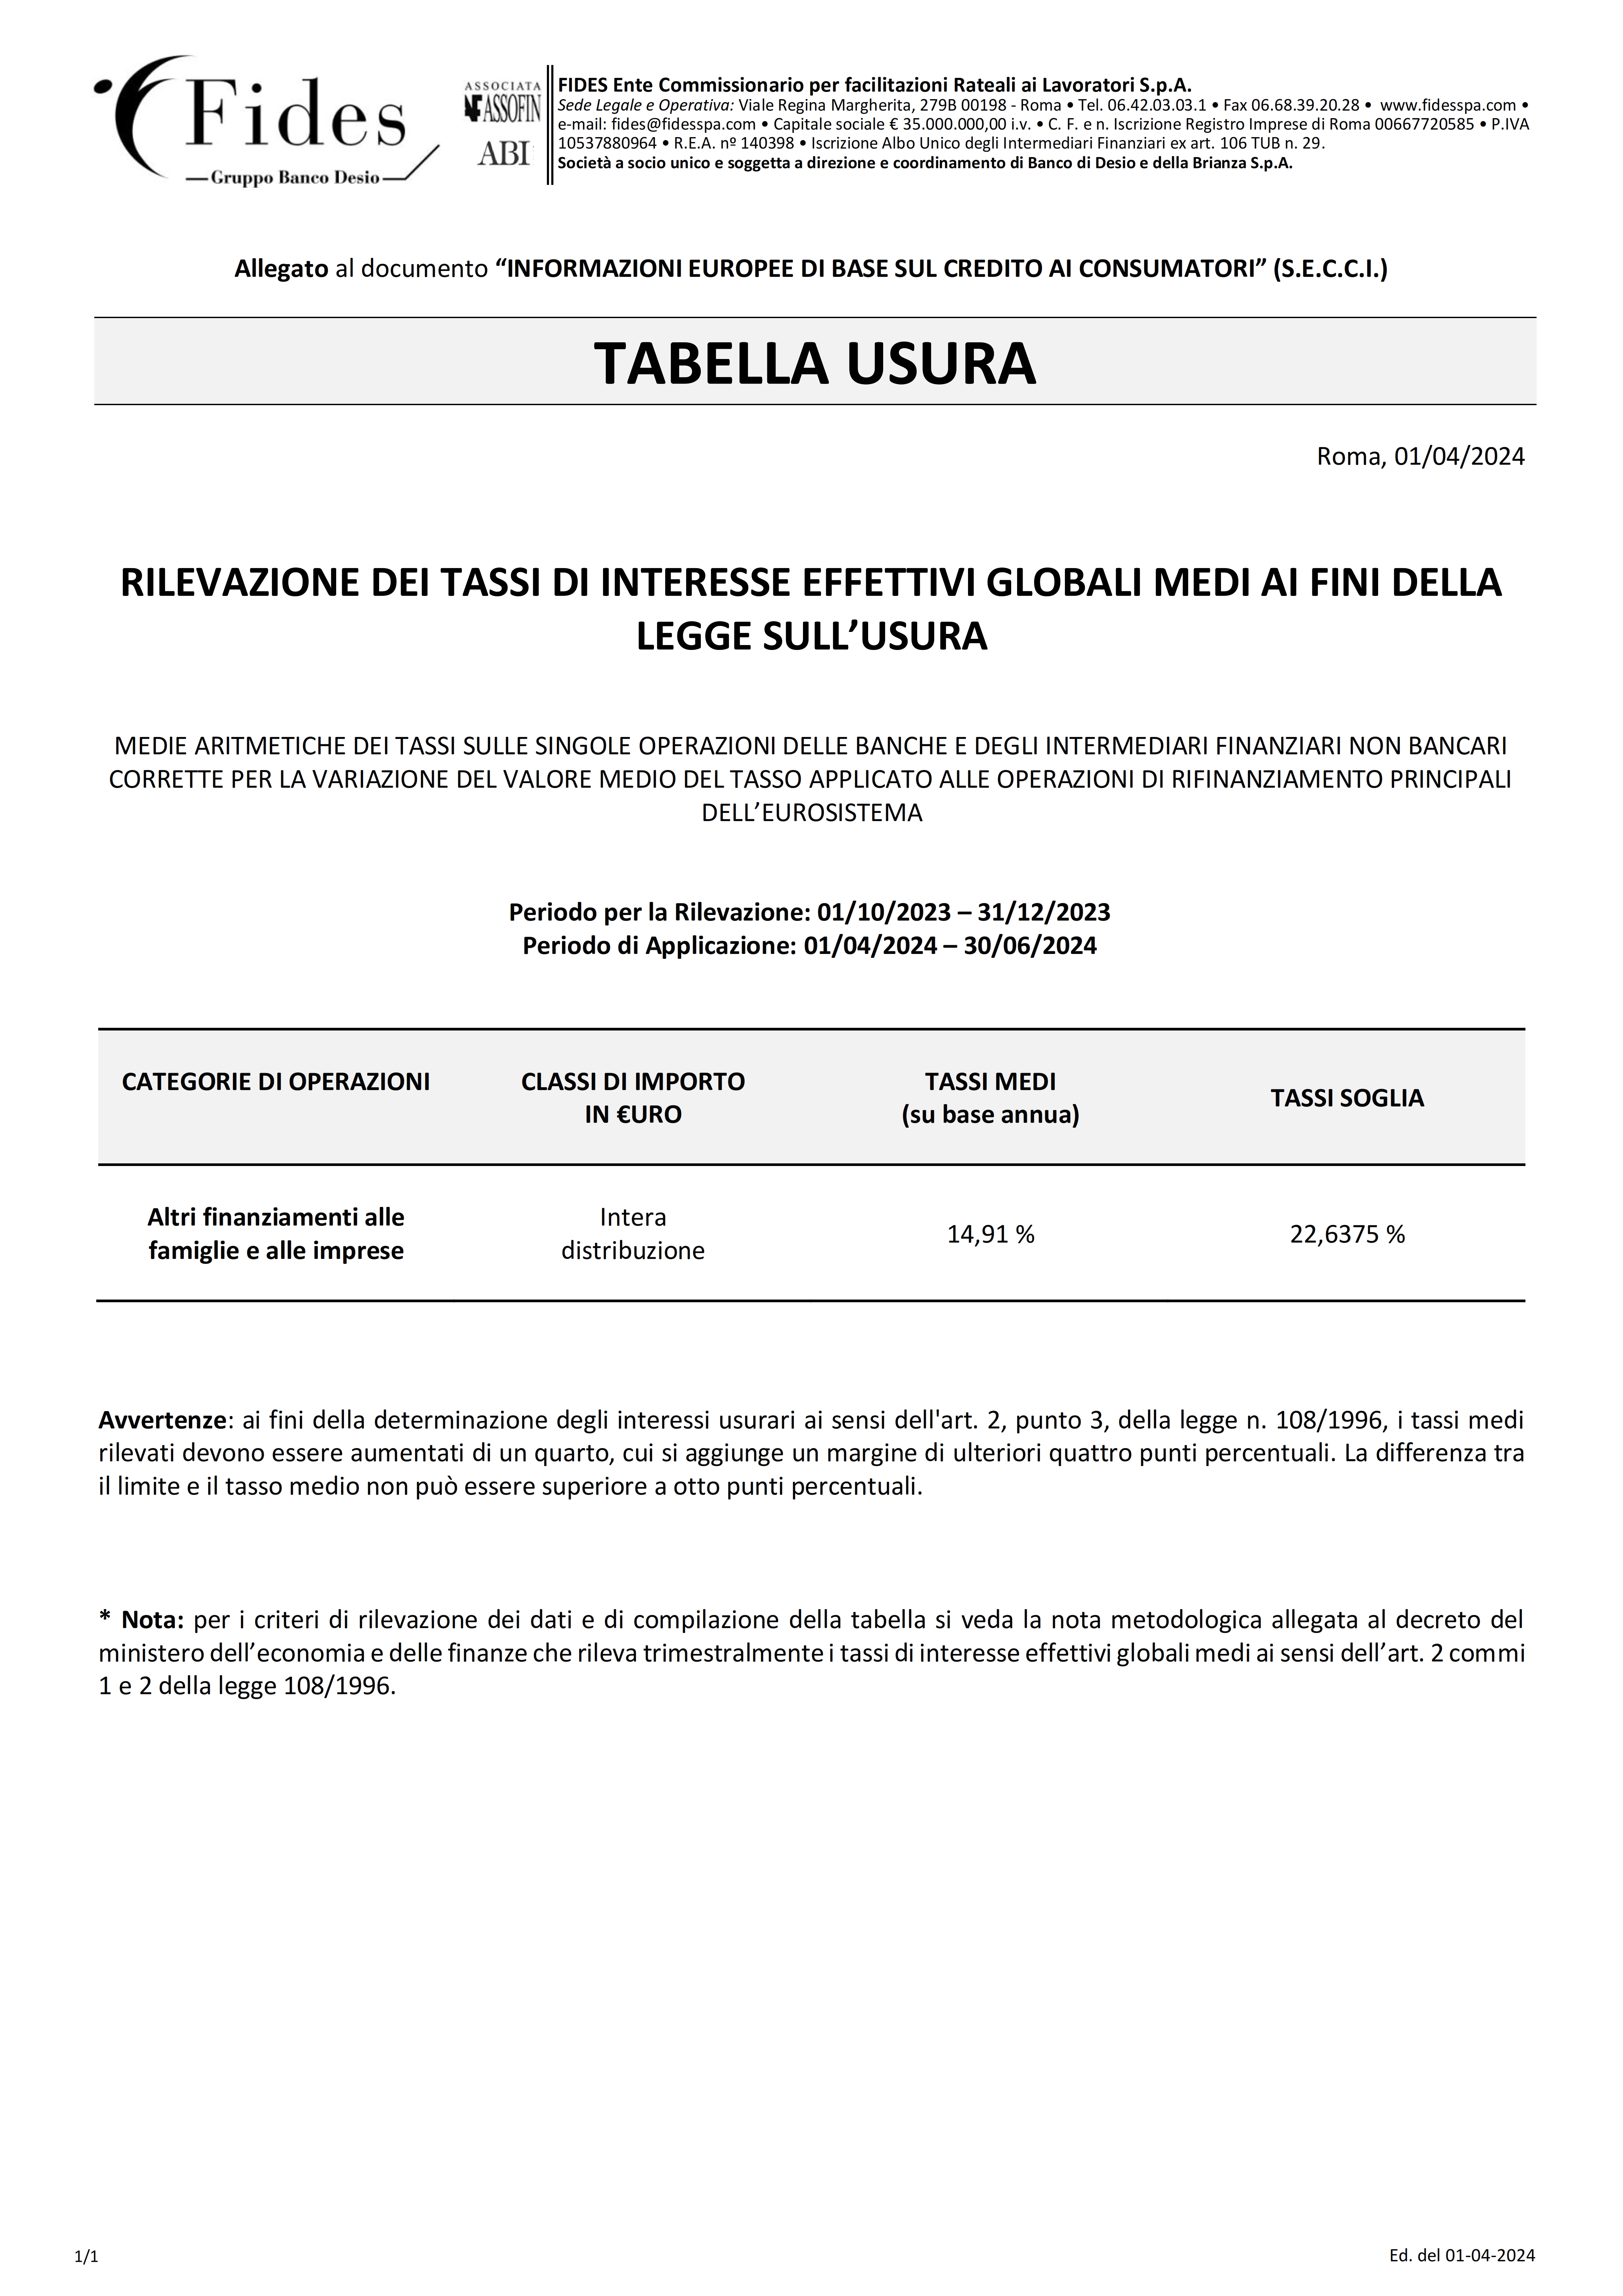 tabella-usura-ii-trim-tfs-1-page-00011651832464.jpg